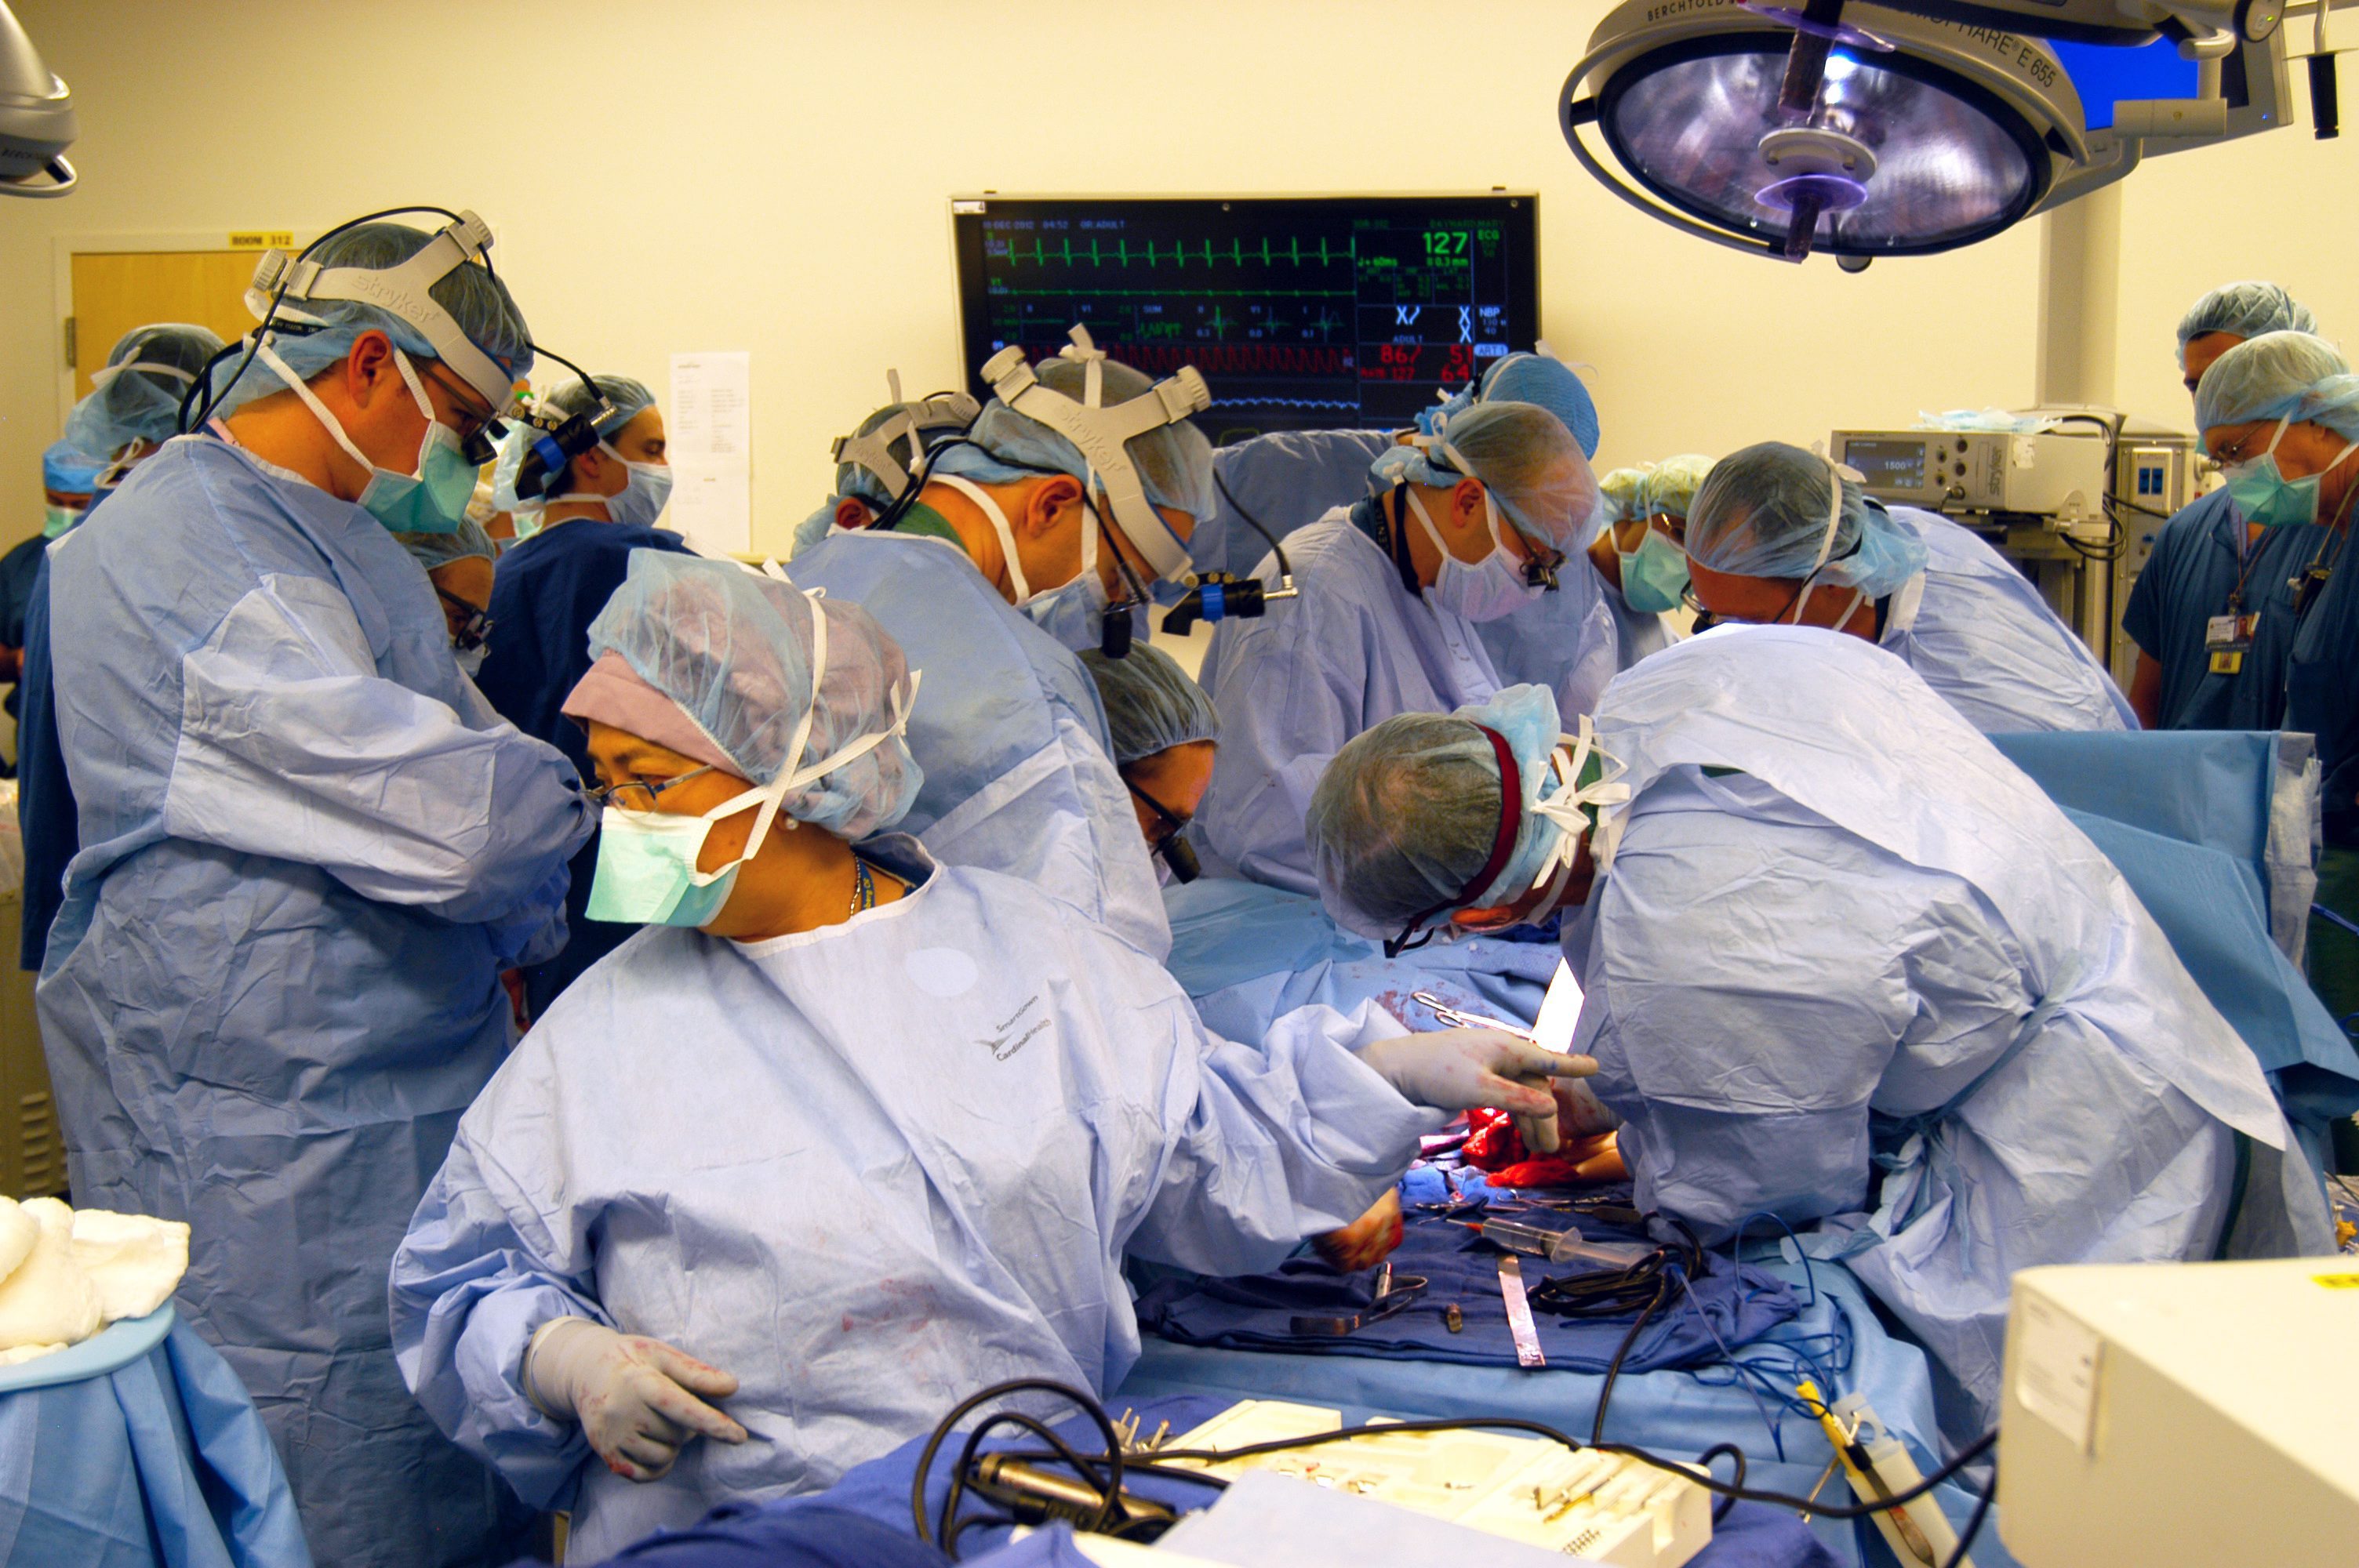 Бъбречните трансплантации са извършени в болница ”Лозенец” (Сн. Архив)